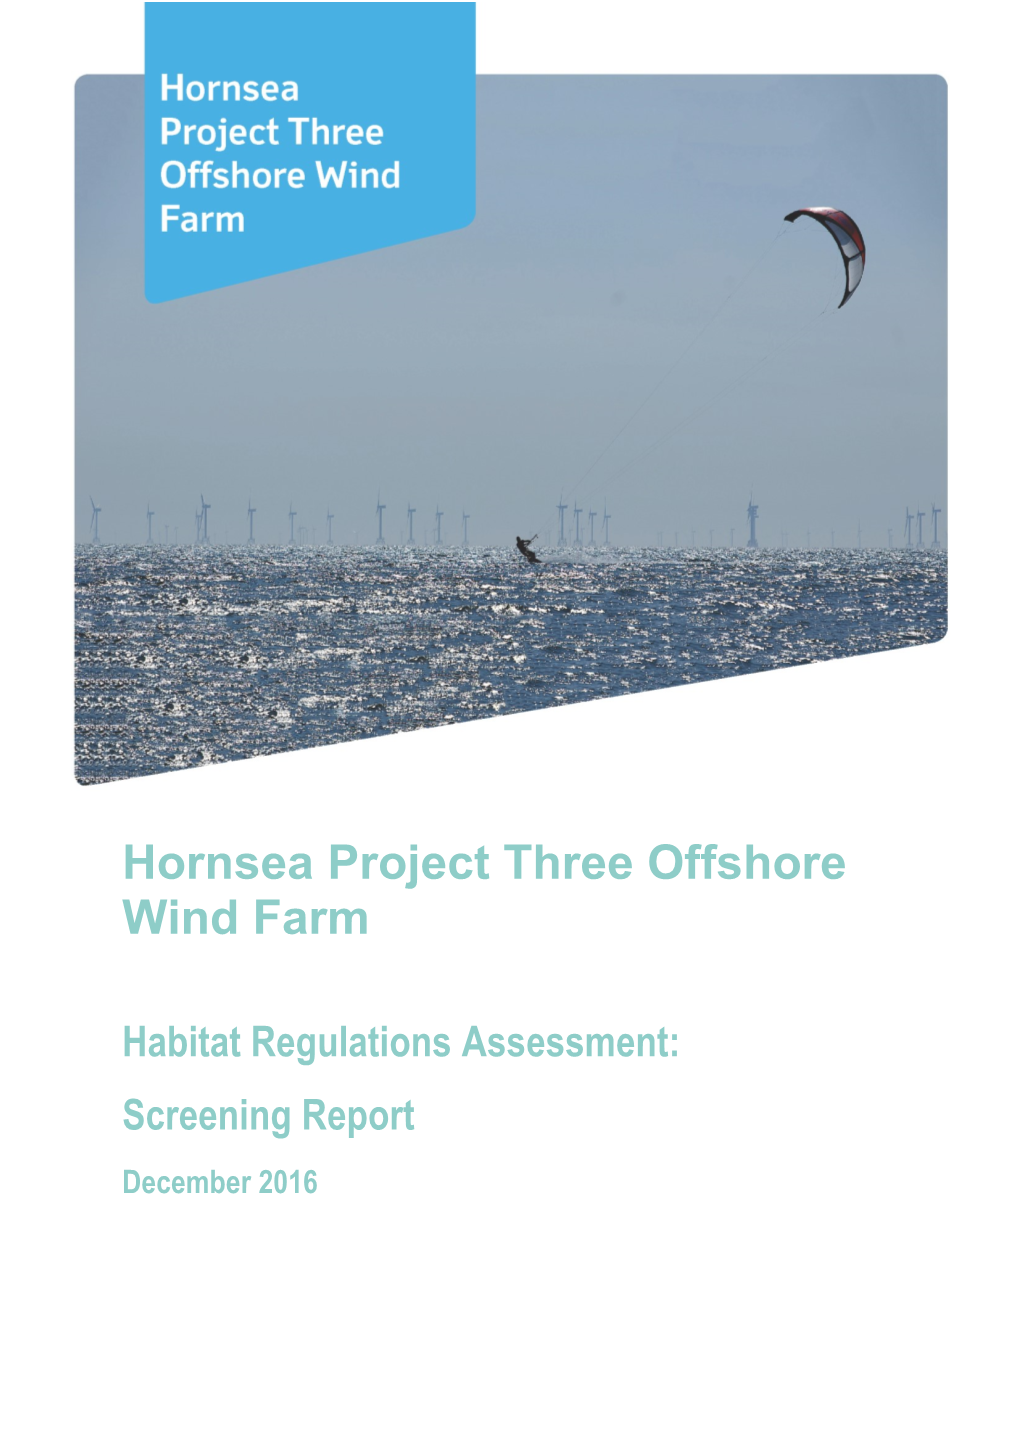 Habitat Regulations Assessment: Screening Report December 2016